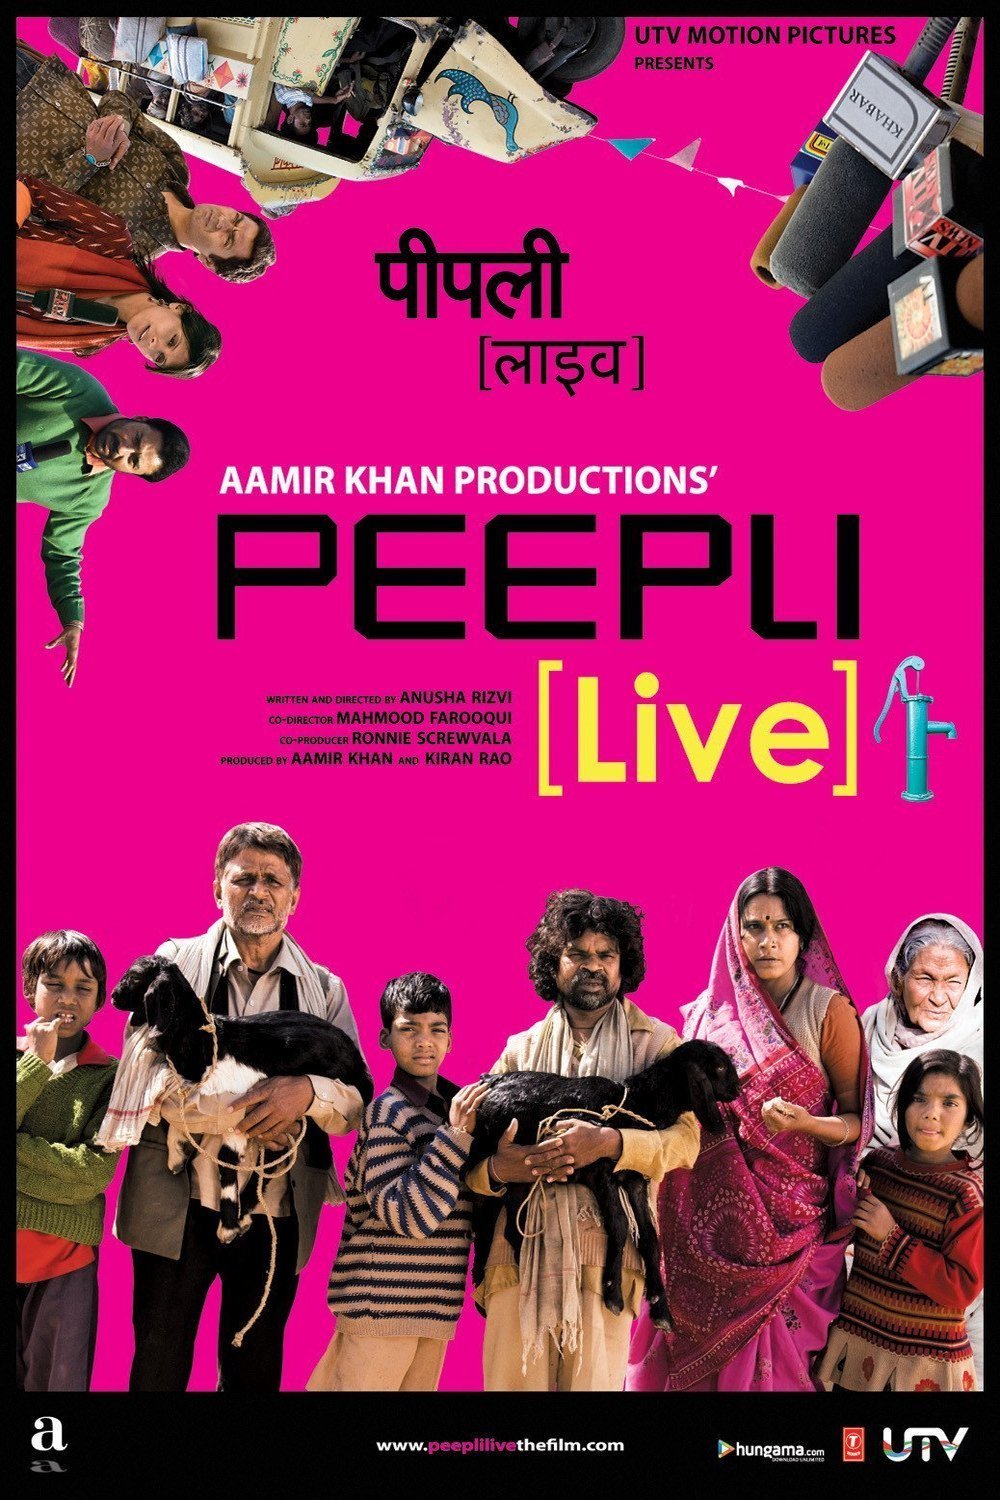 Hindi poster of the movie Peepli (Live)